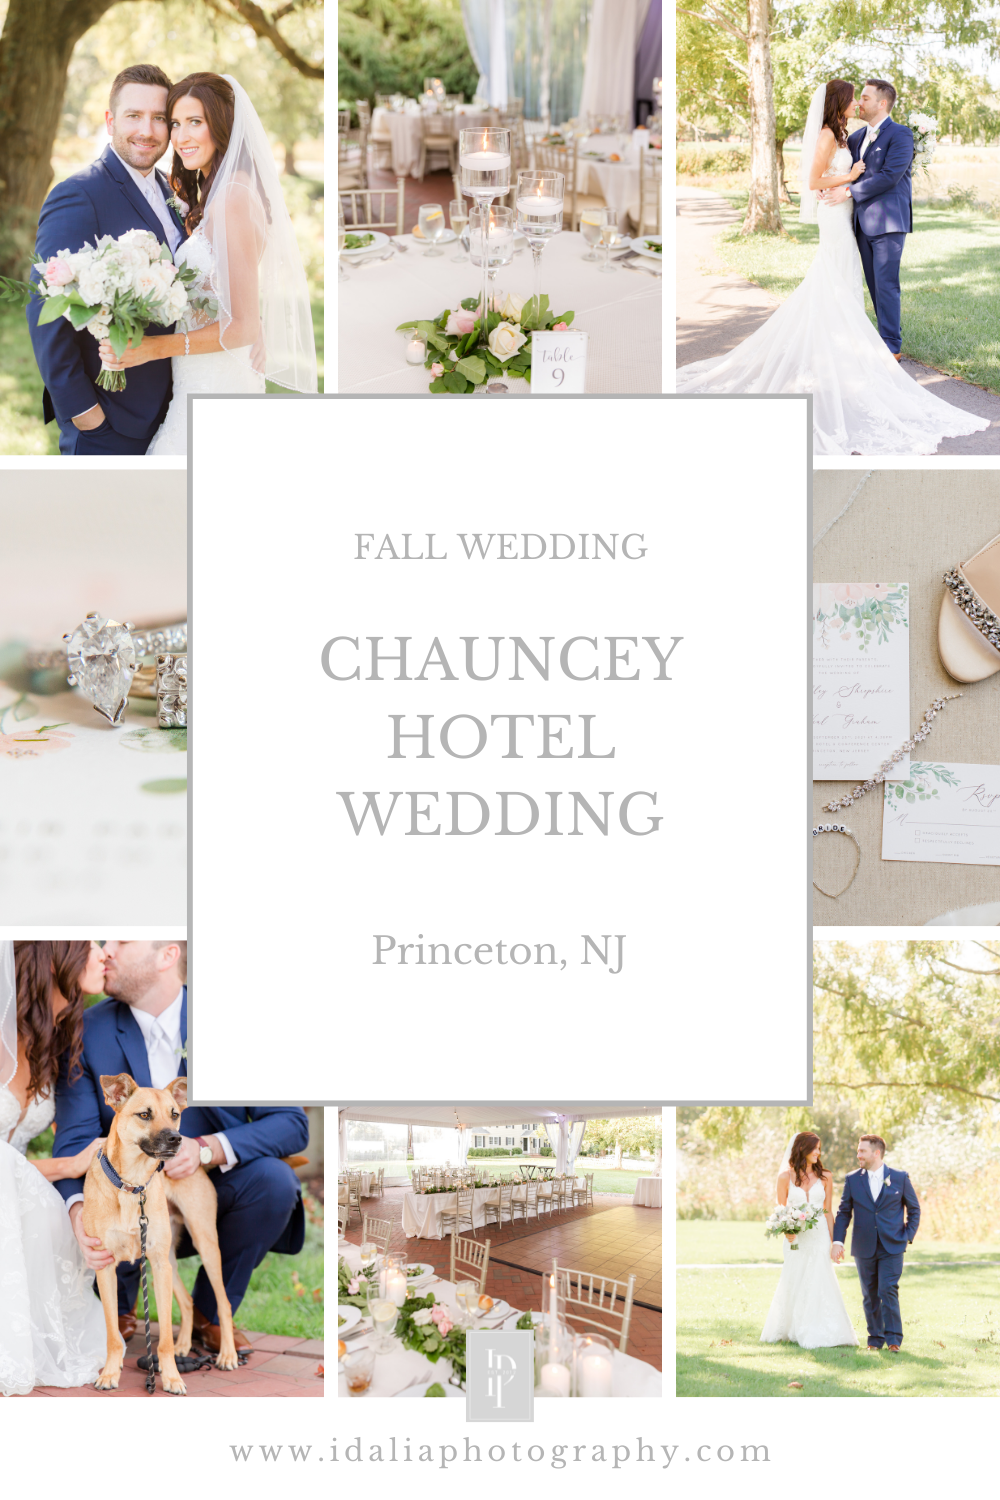 Chauncey Hotel Wedding with Earthy Fall Tones in Princeton, NJ photographed by NJ wedding photographer Idalia Photography